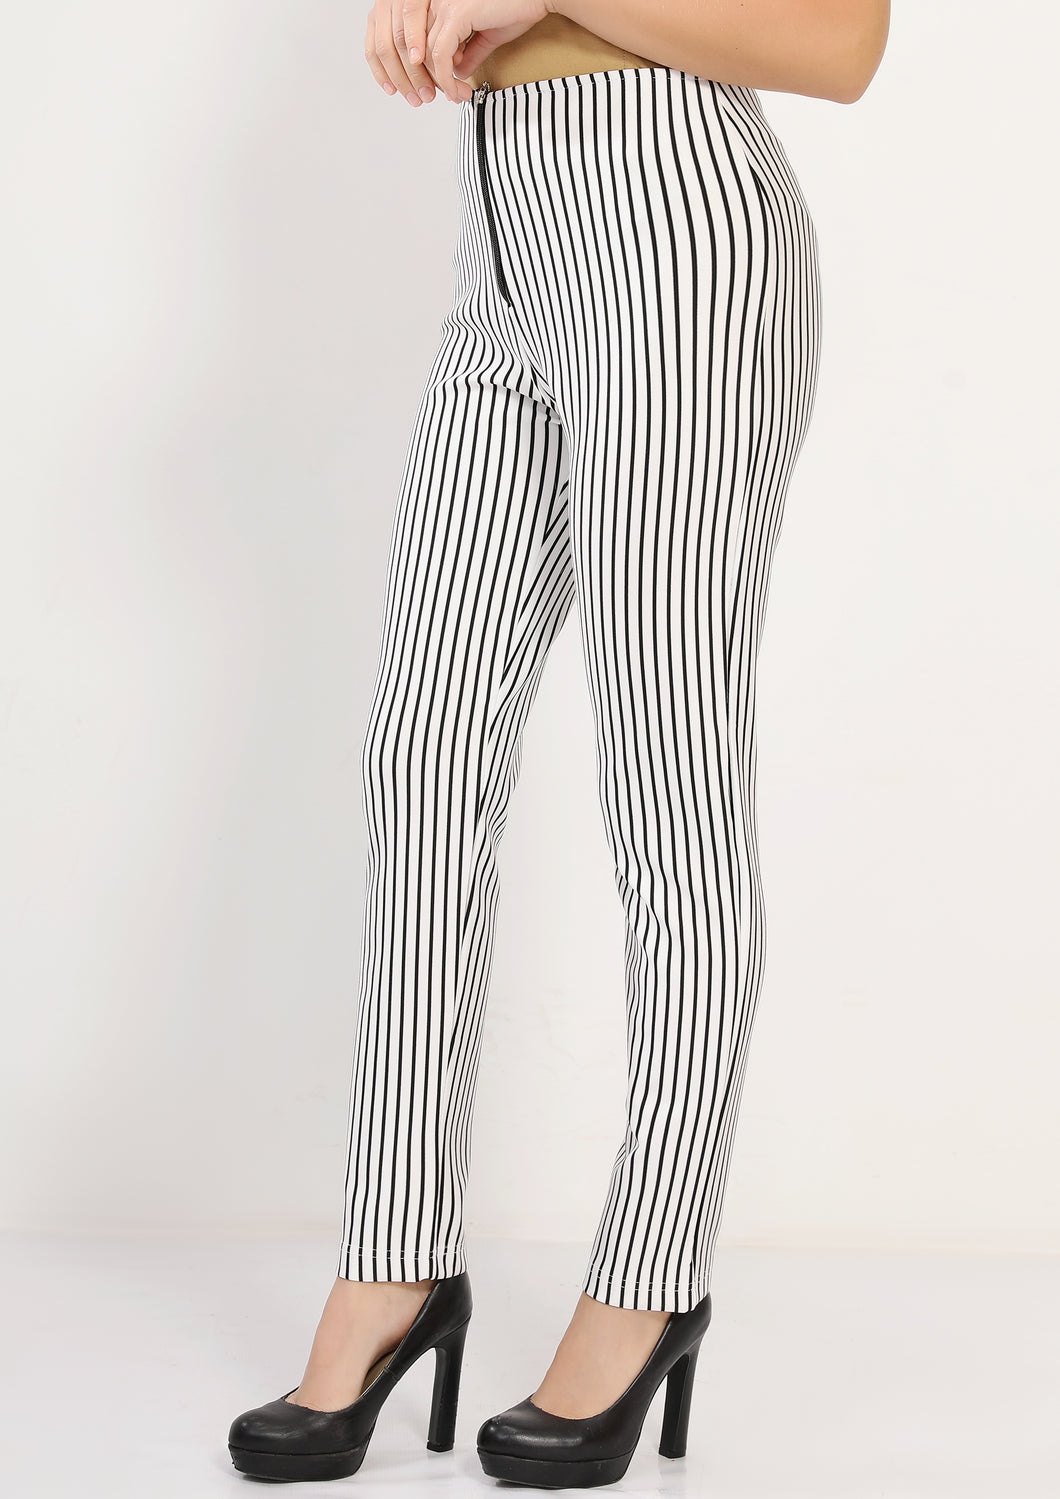 High waist white striped pants